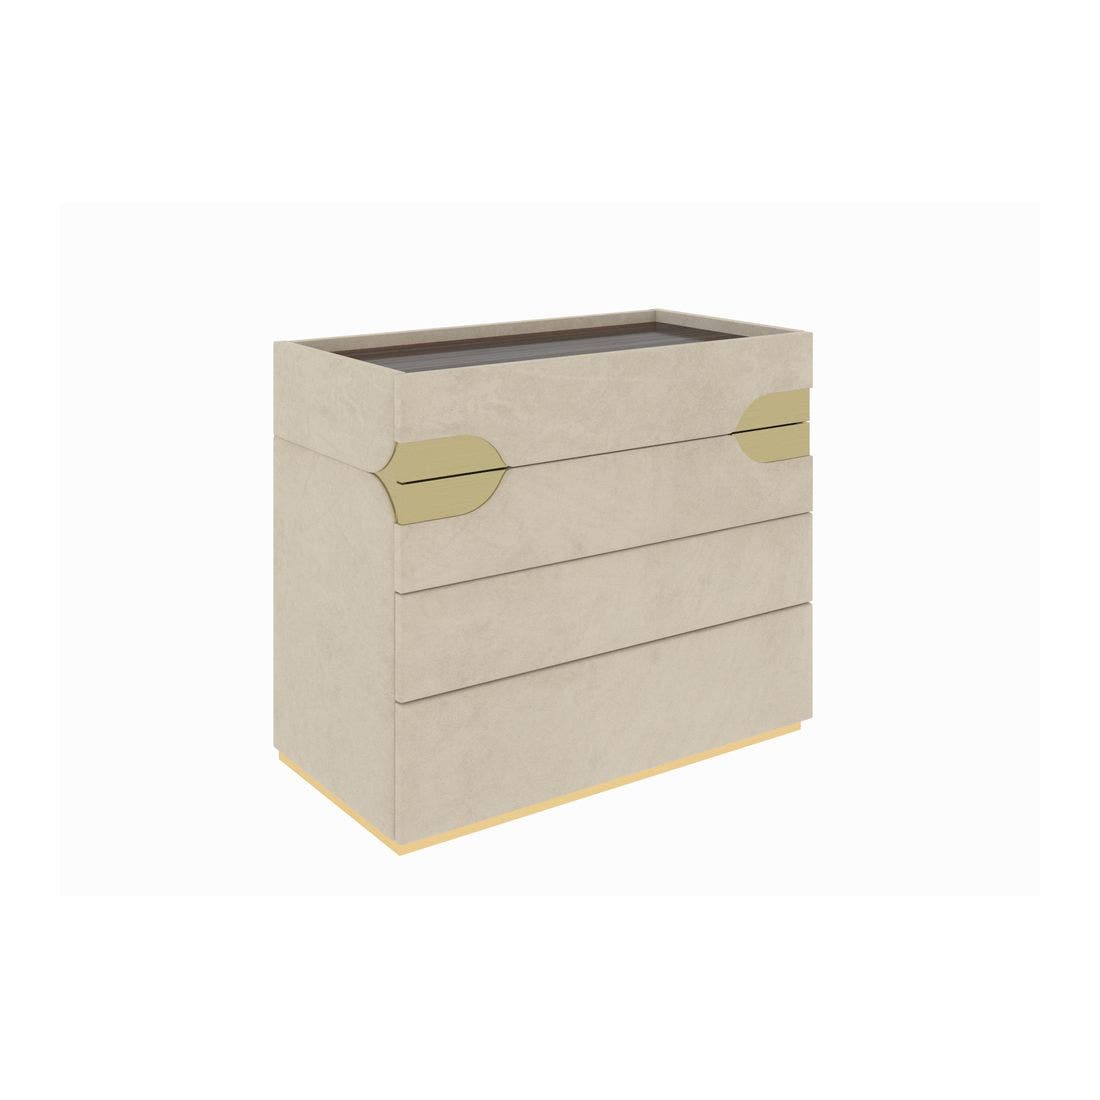 19135702-olivana-furniture-storage-organization-storage-furniture-01